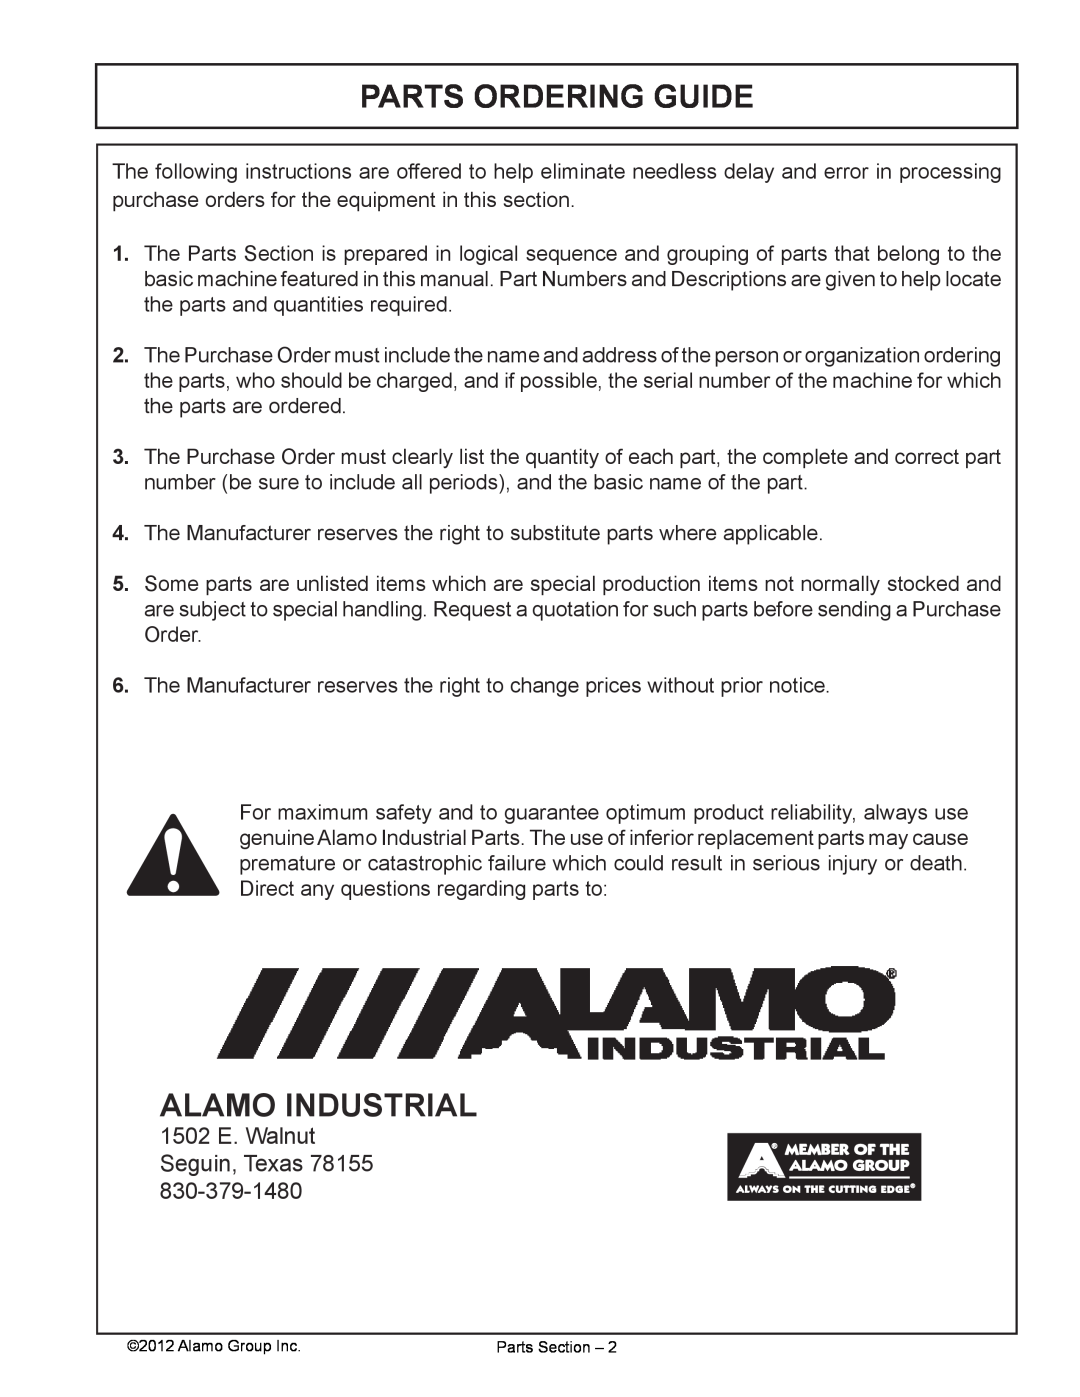 Alamo 02968915P manual Parts Ordering Guide, Alamo Industrial, 1502 E. Walnut Seguin, Texas 78155 